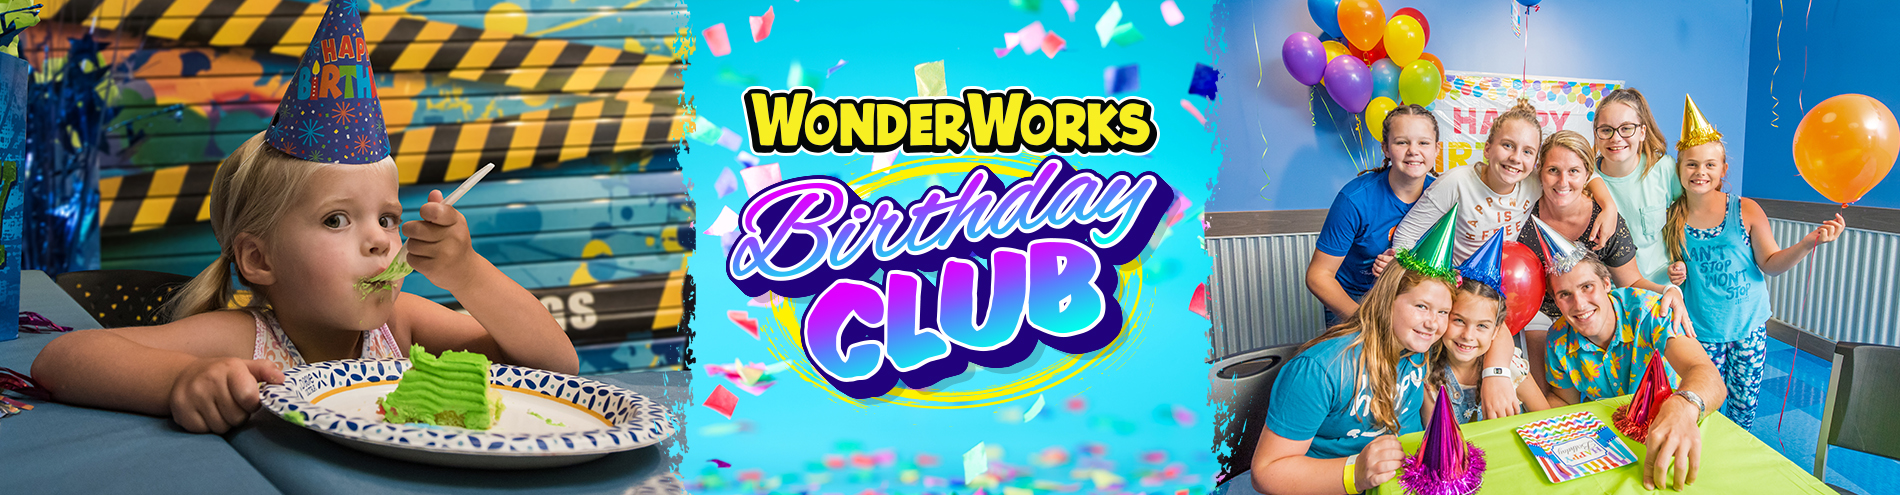 WonderWorks Orlando Birthday Club Web Slider